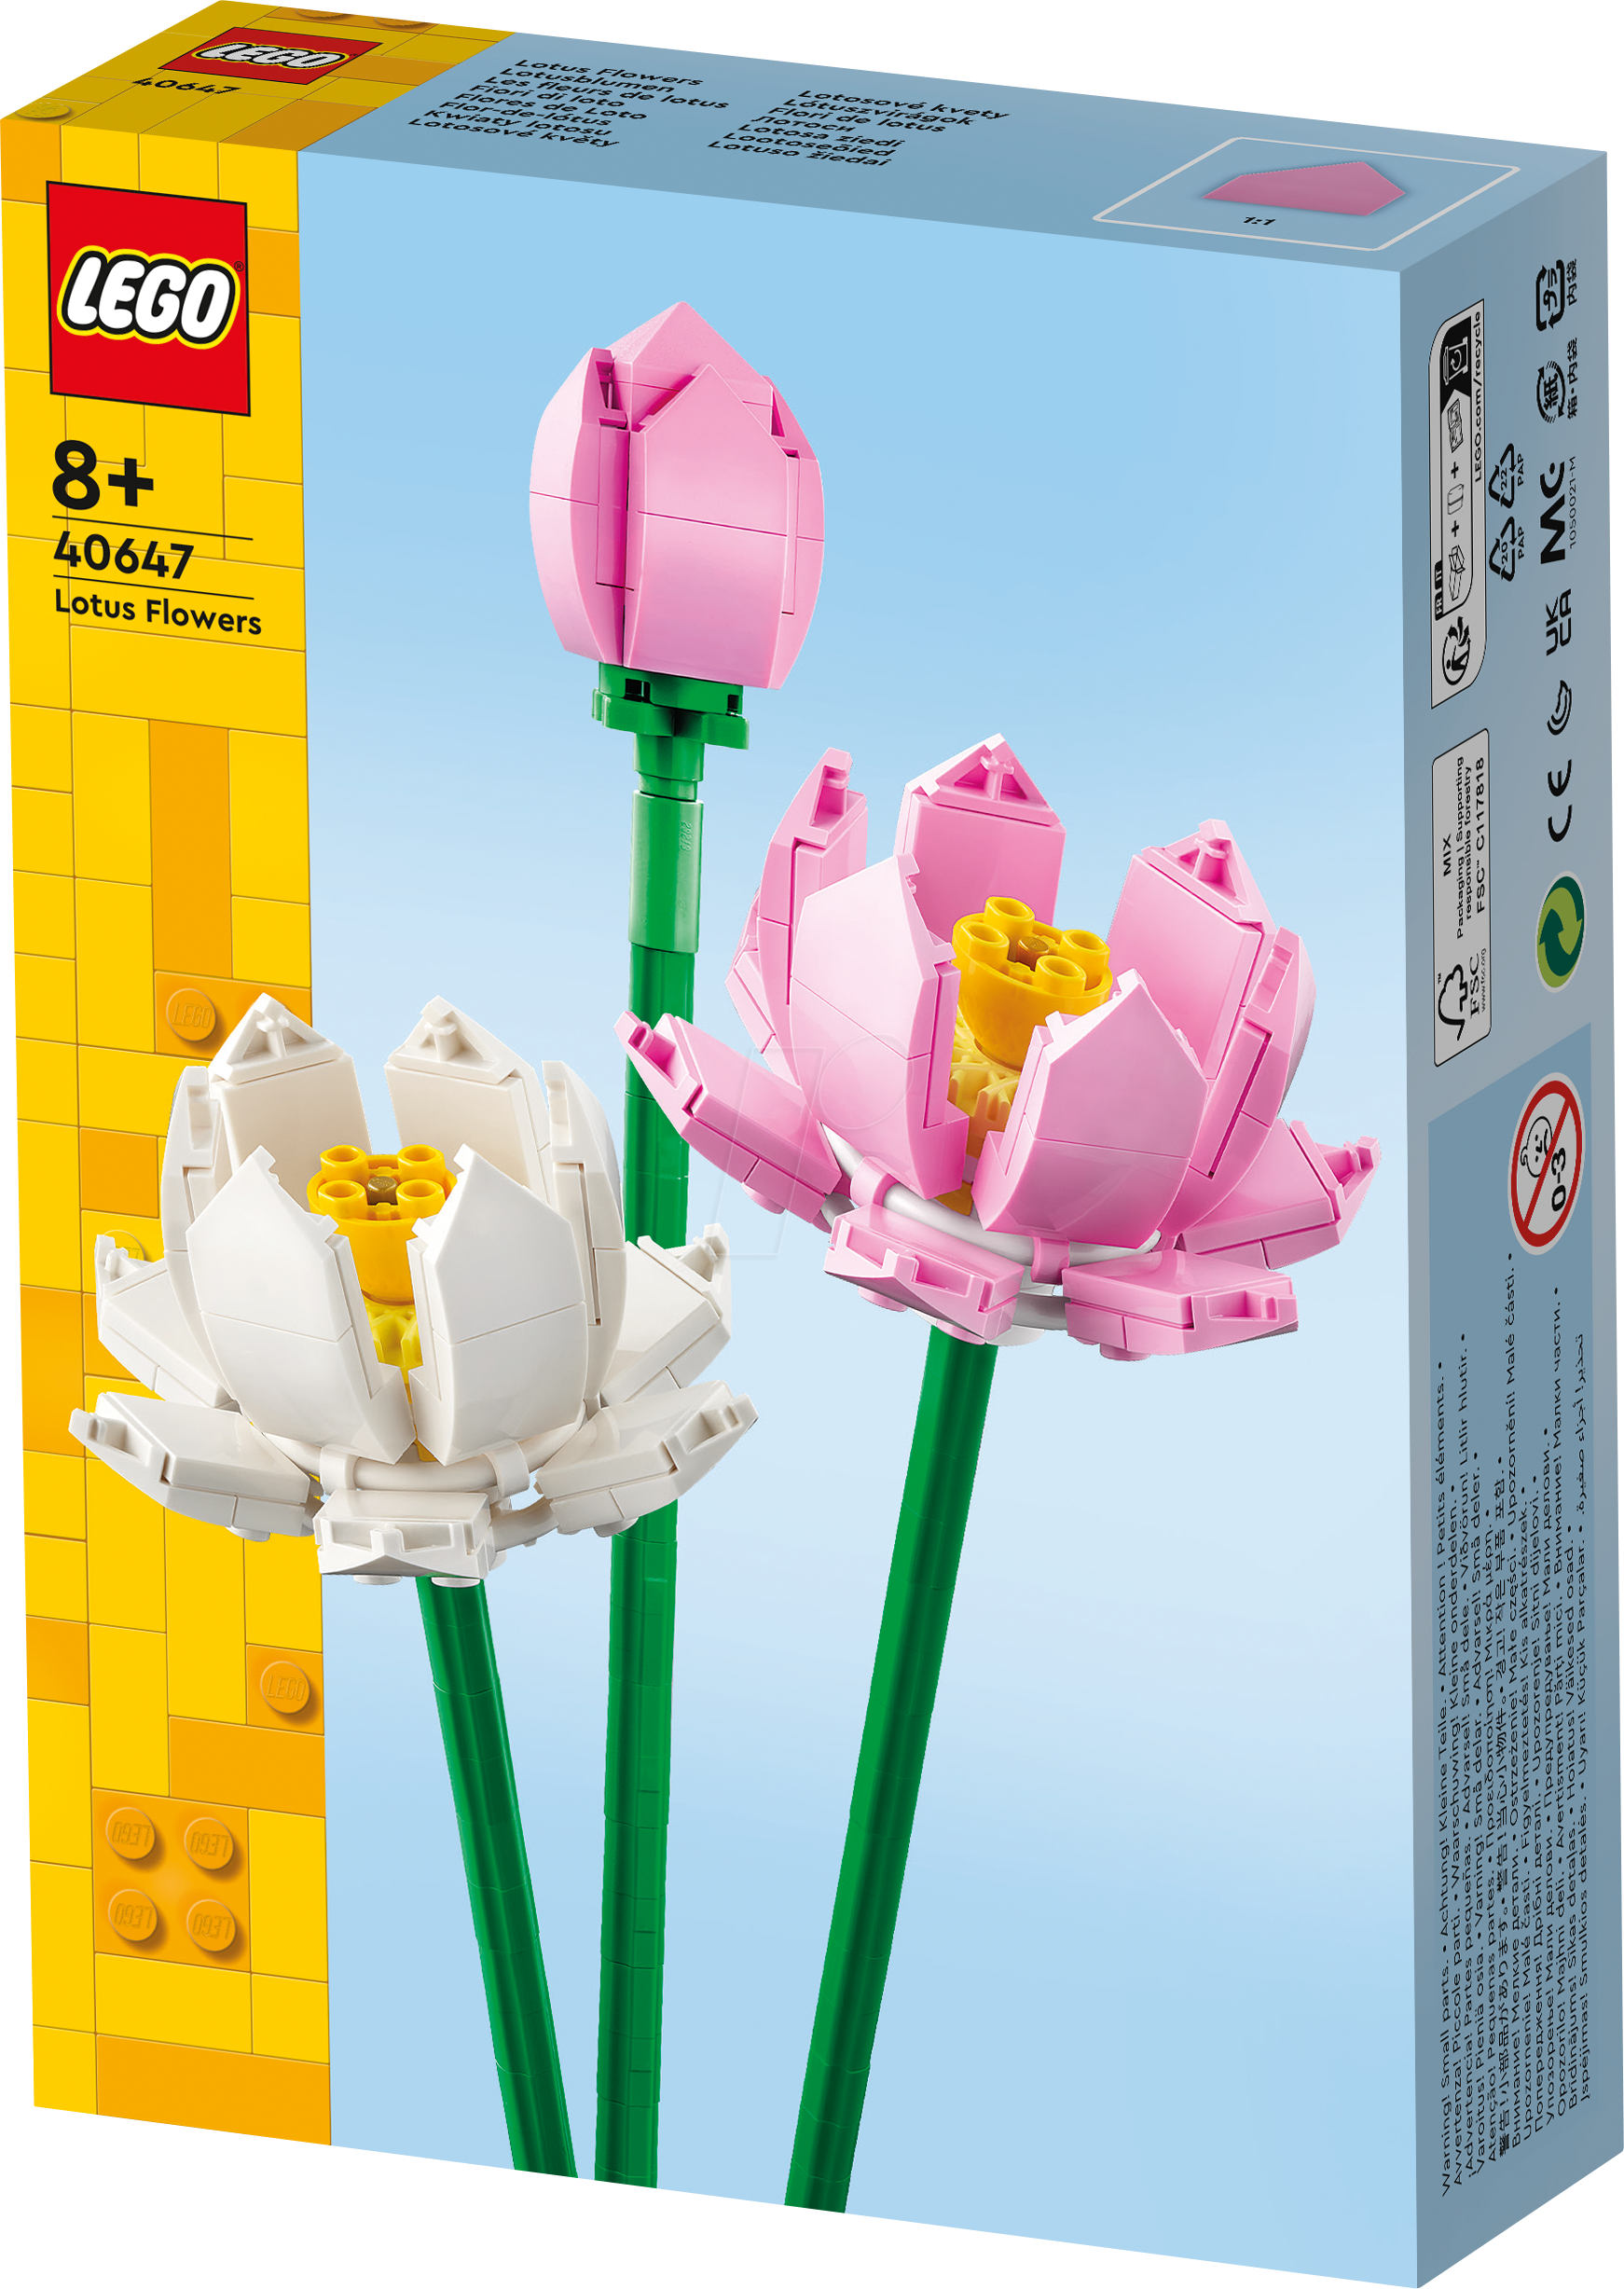 LEGO 40647: LEGO® Lotus Flowers at reichelt elektronik